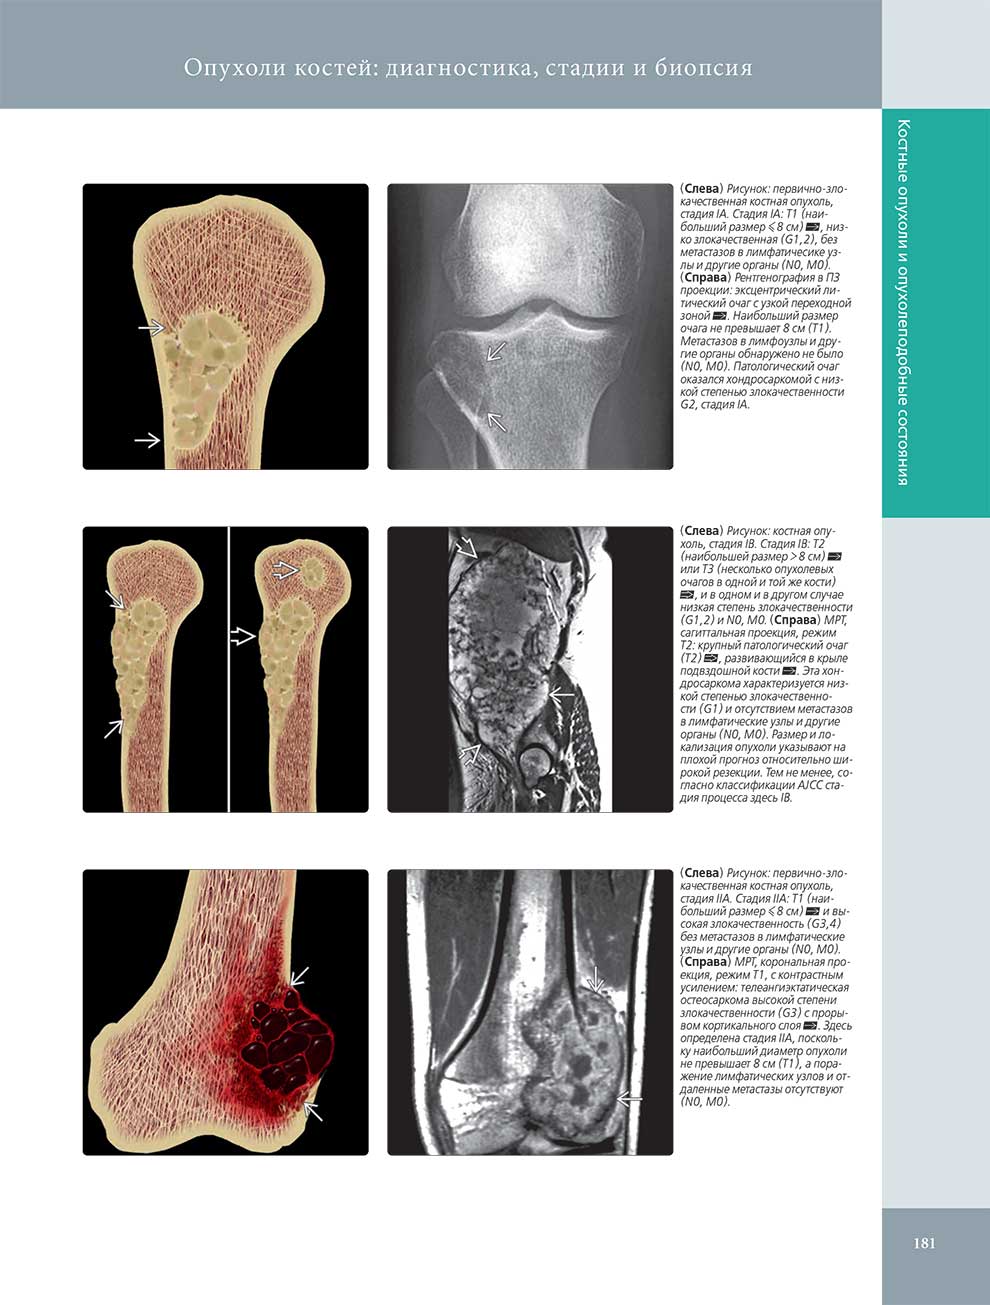 Опухоли костей: диагностика, стадии и биопсия